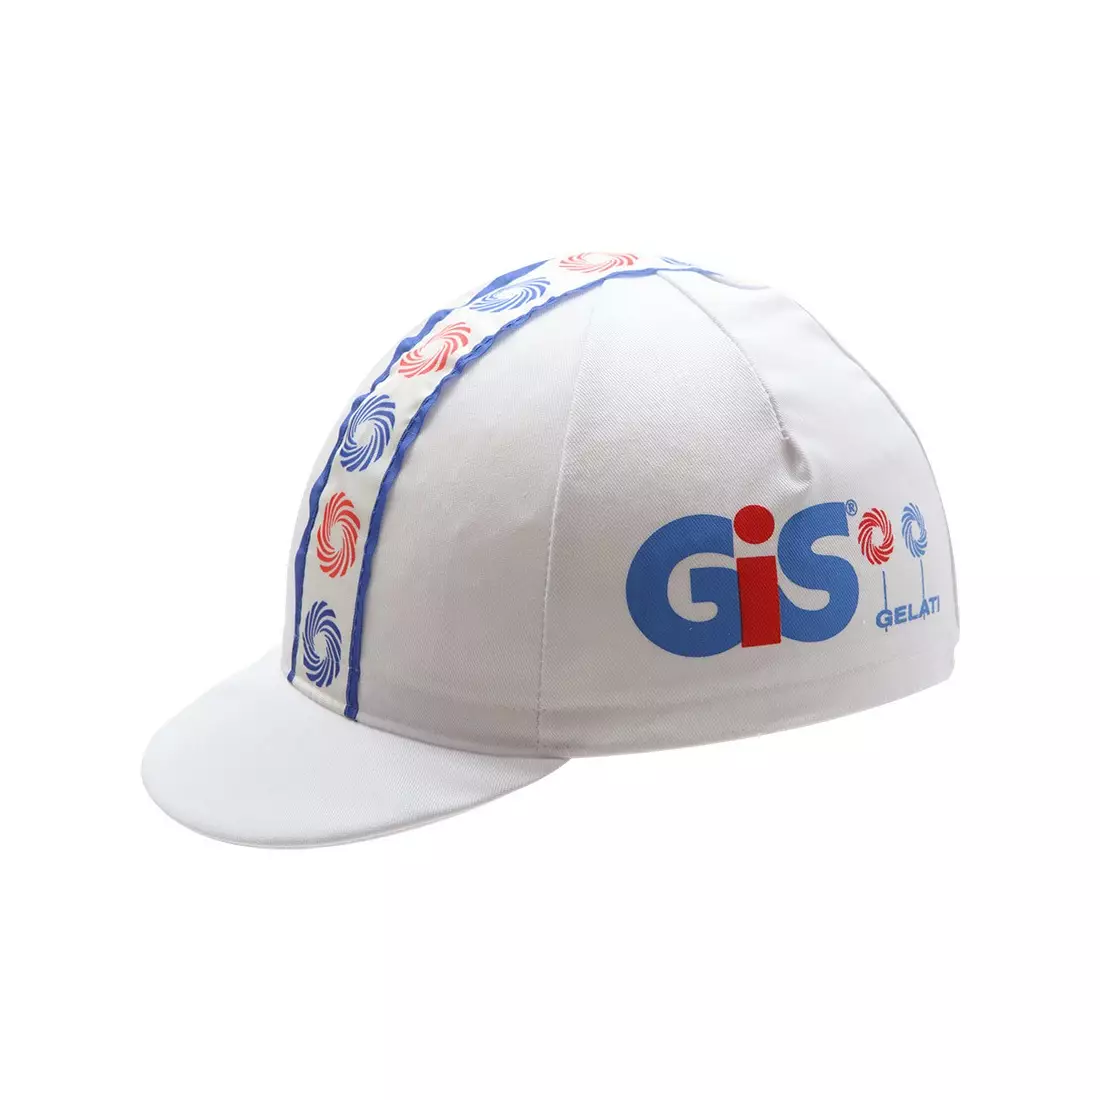 APIS PROFI GIS Cycling cap with a visor